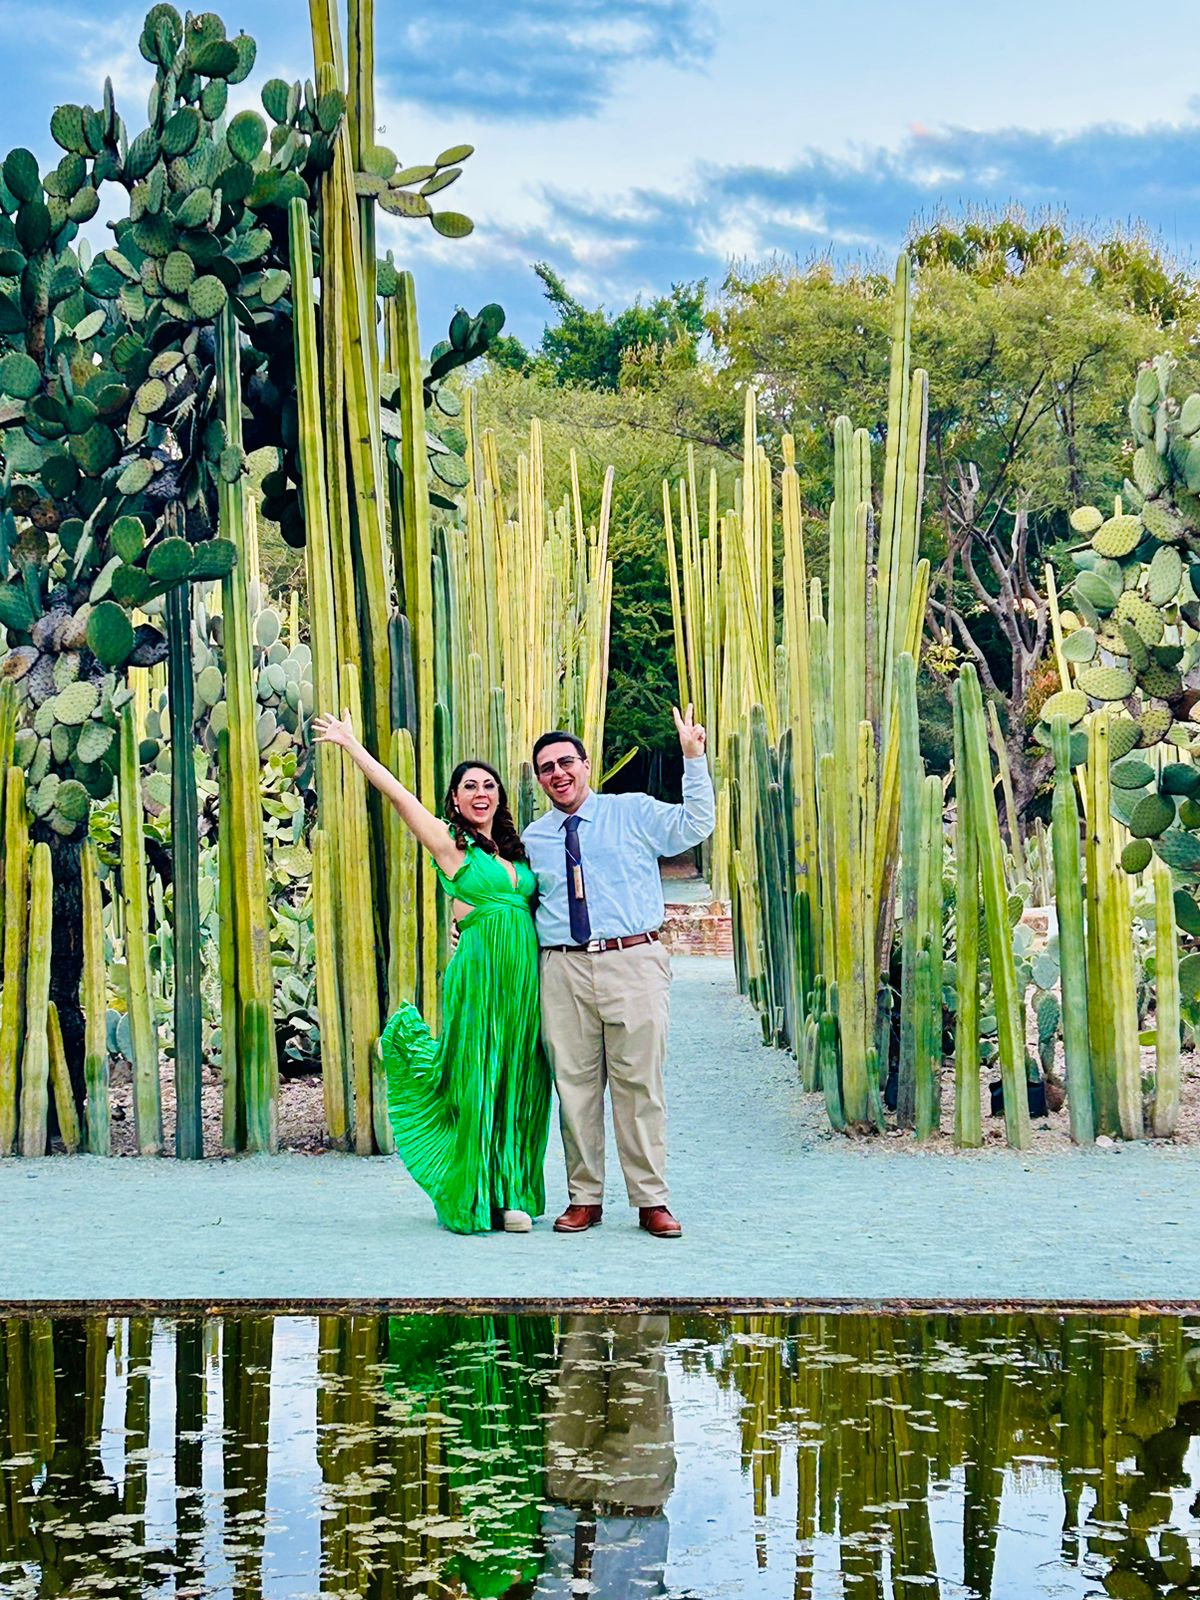 Emilia - verde venta - Lend the Trend renta de vestidos mexico